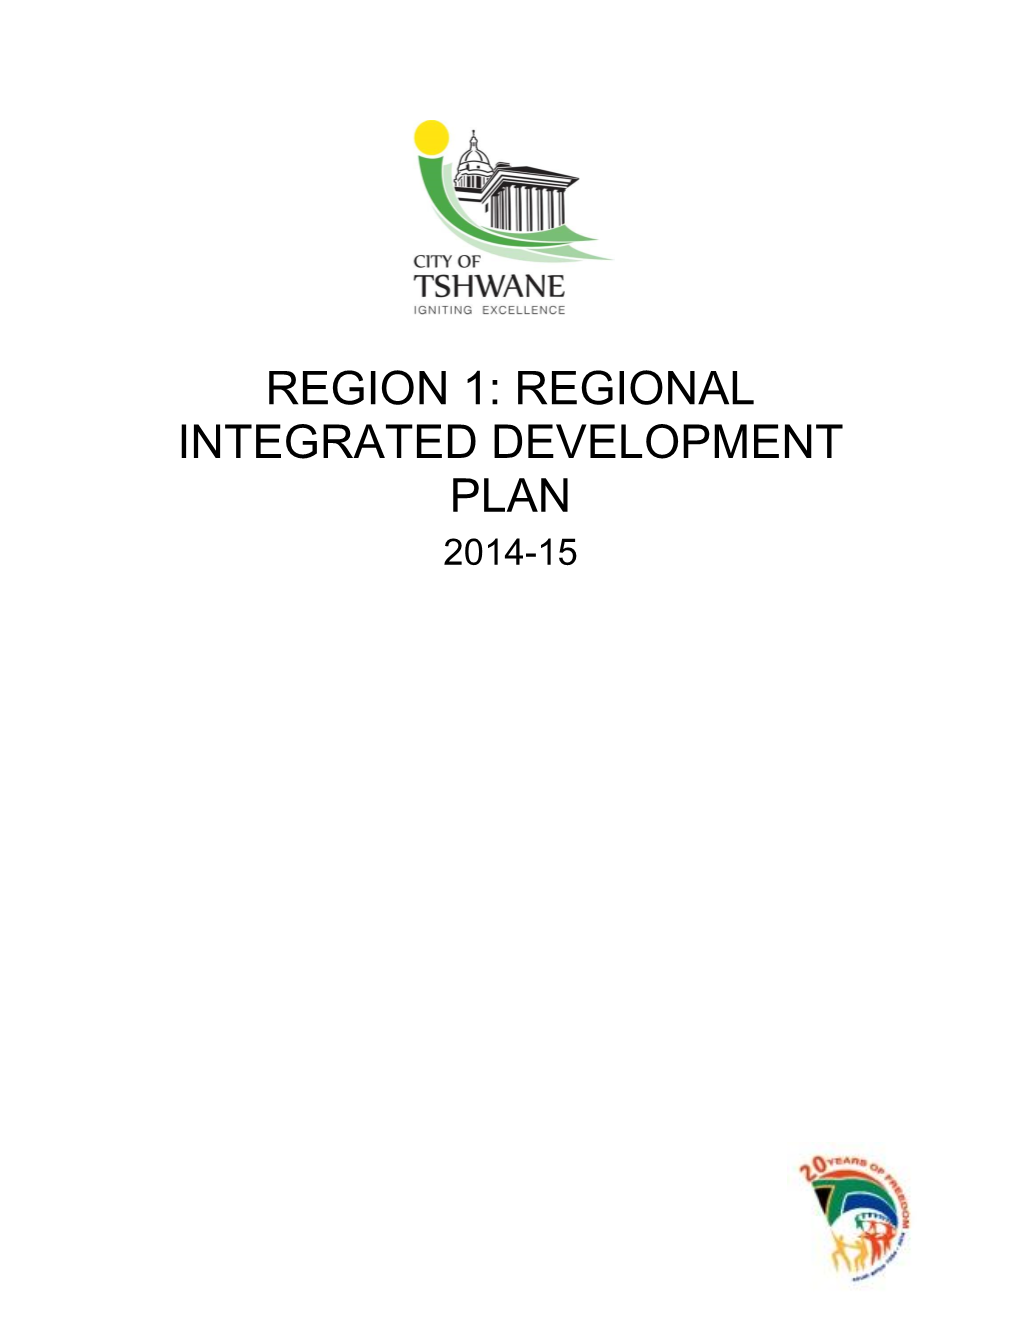 Region 1: Regional Integrated Development Plan 2014-15